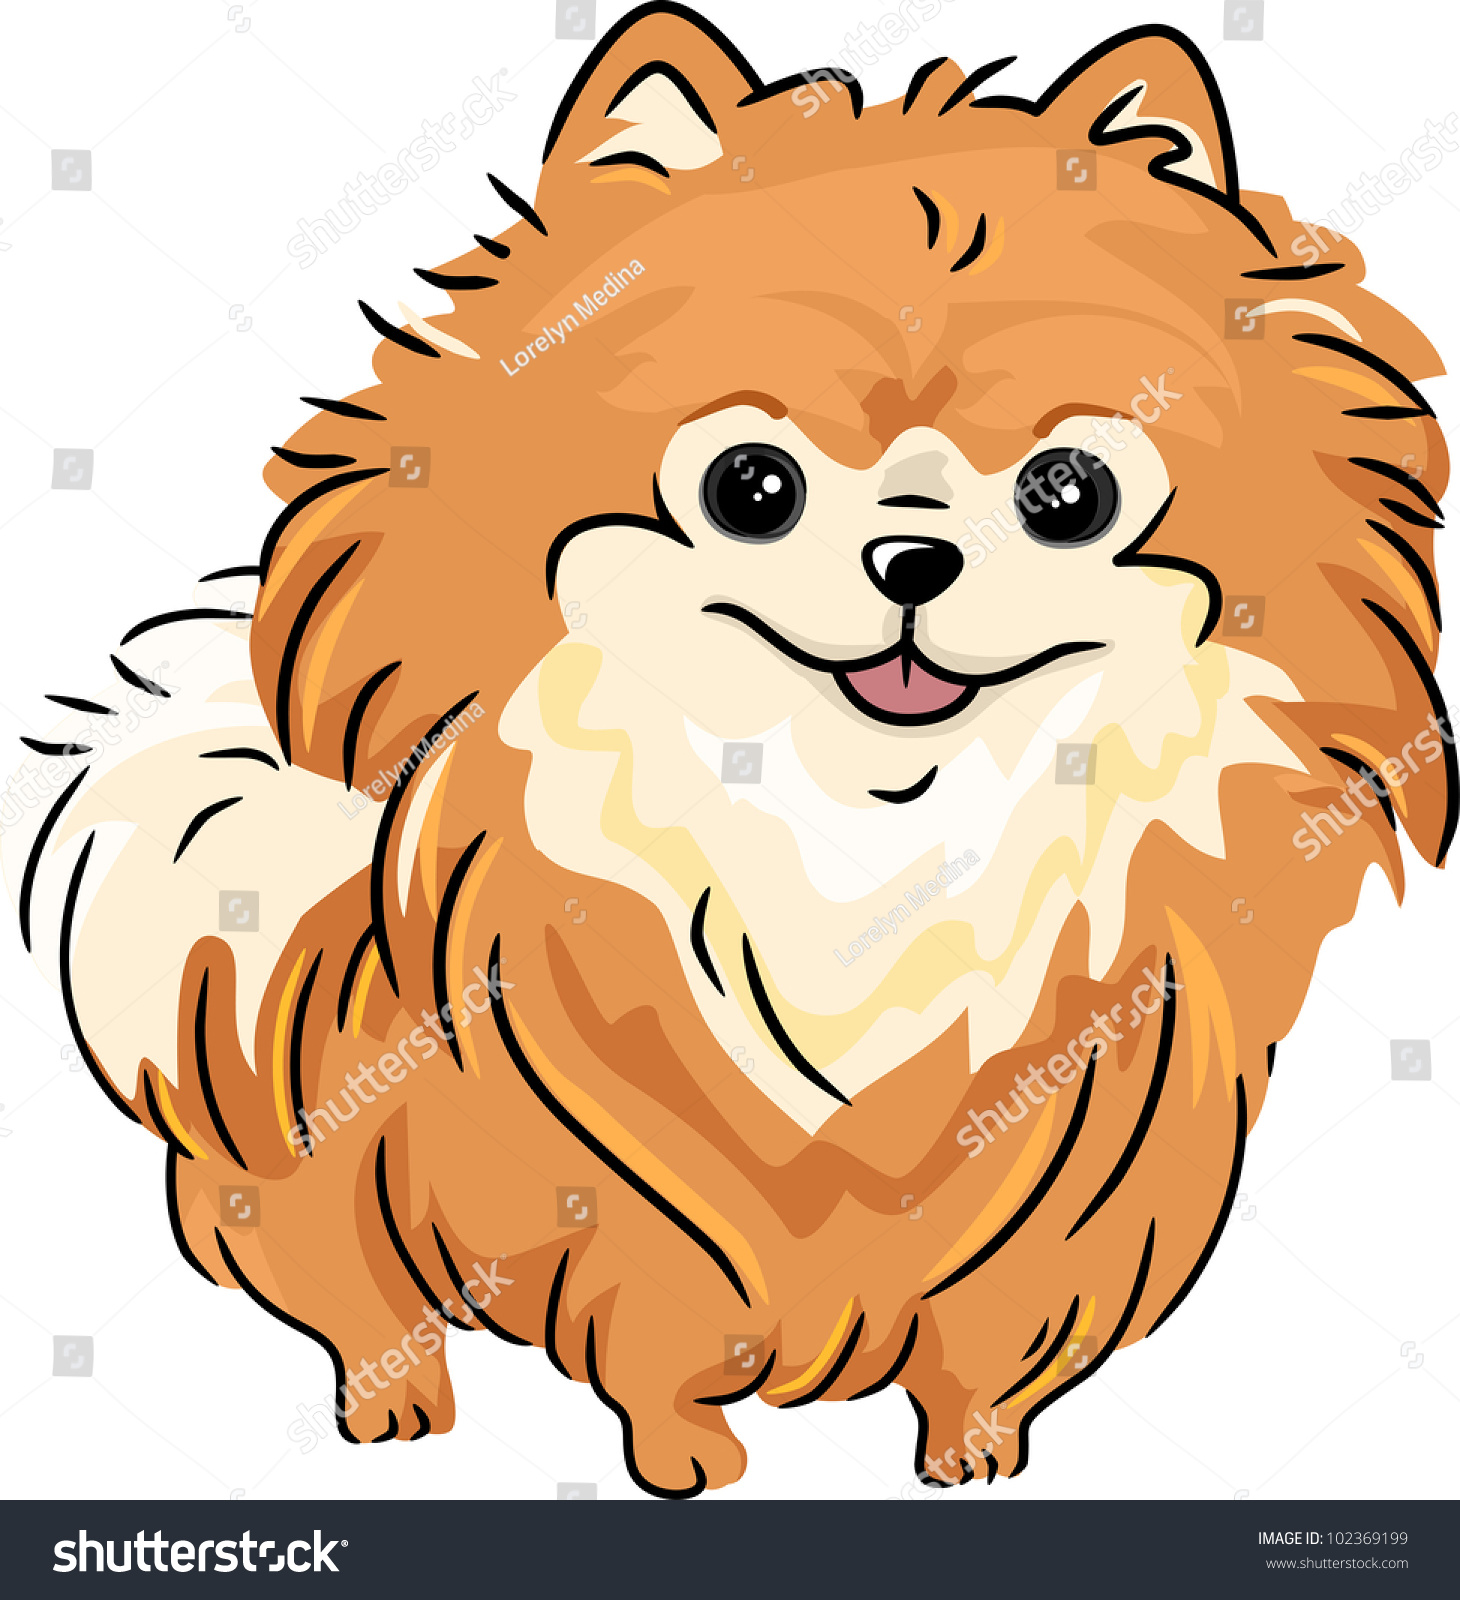 Illustration Featuring A Pomeranian - 102369199 : Shutterstock